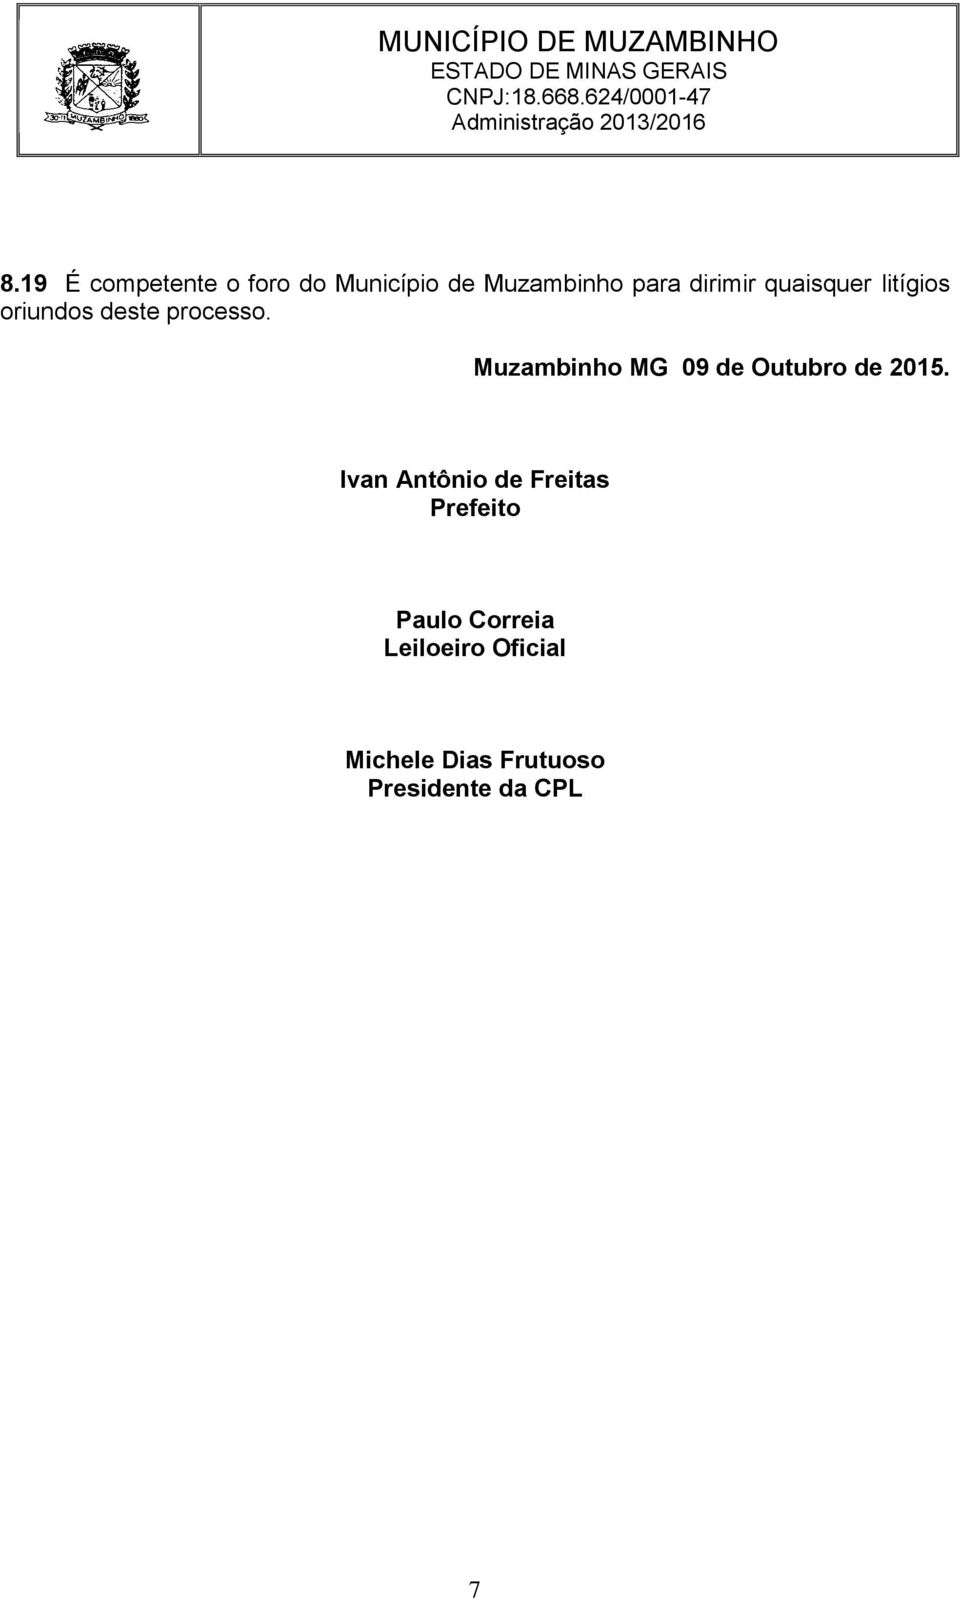 Muzambinho MG 09 de Outubro de 2015.